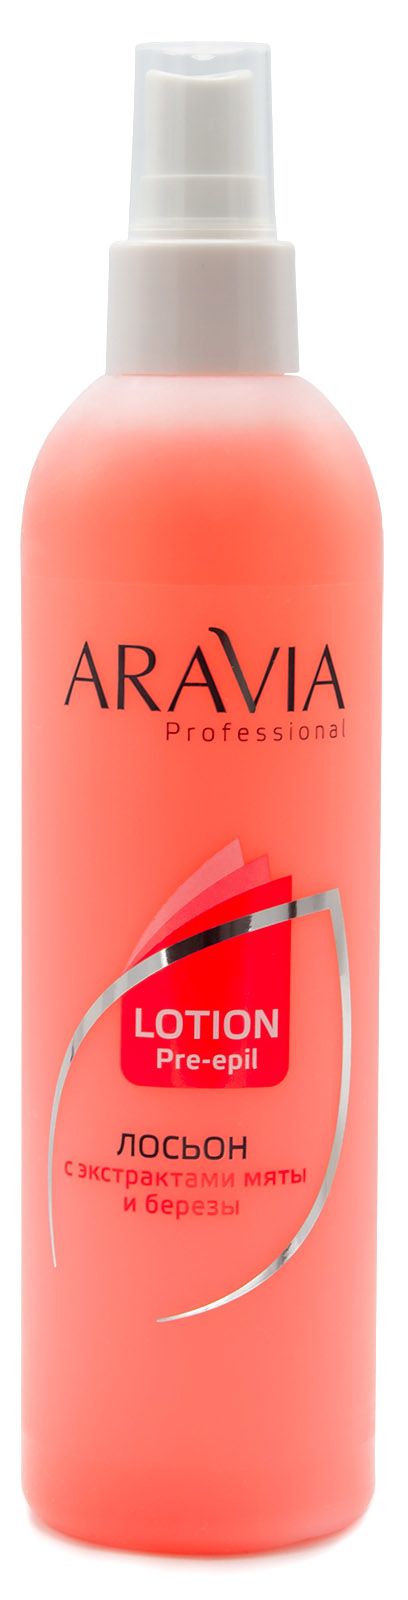 Aravia Professional Лосьон для подготовки кожи перед депиляц